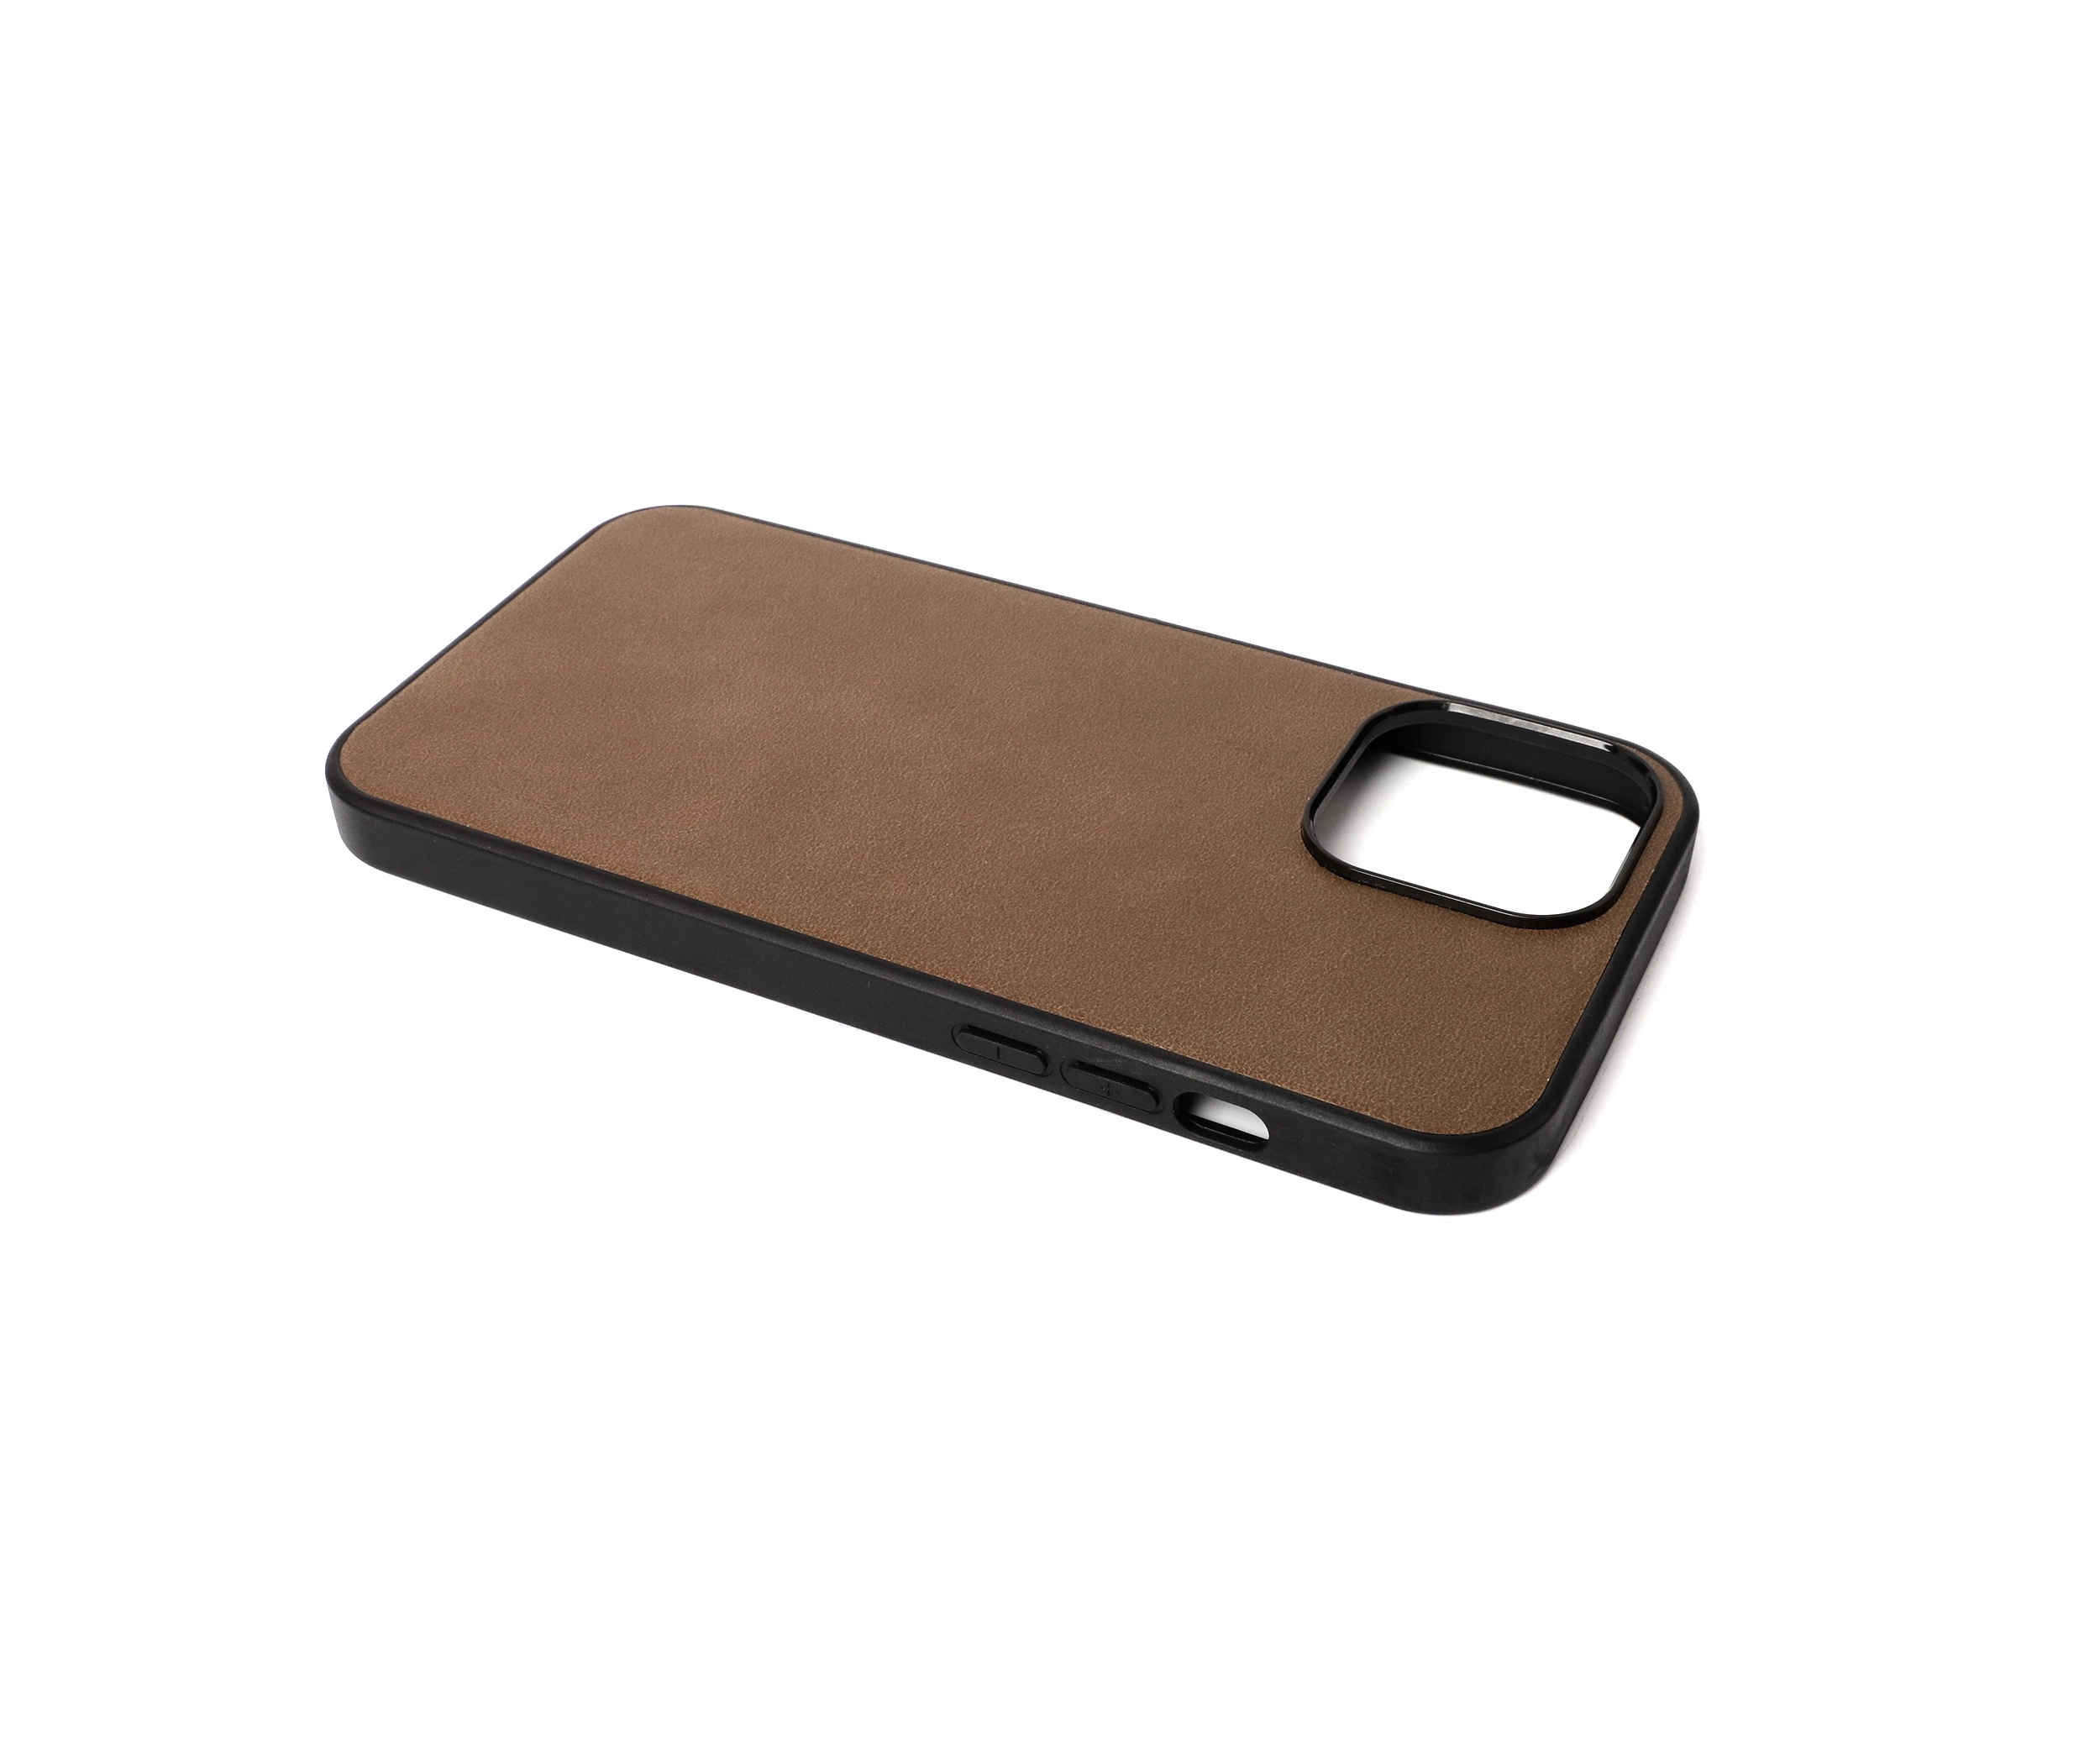 Wholesale Leather iPhone Case Benefits